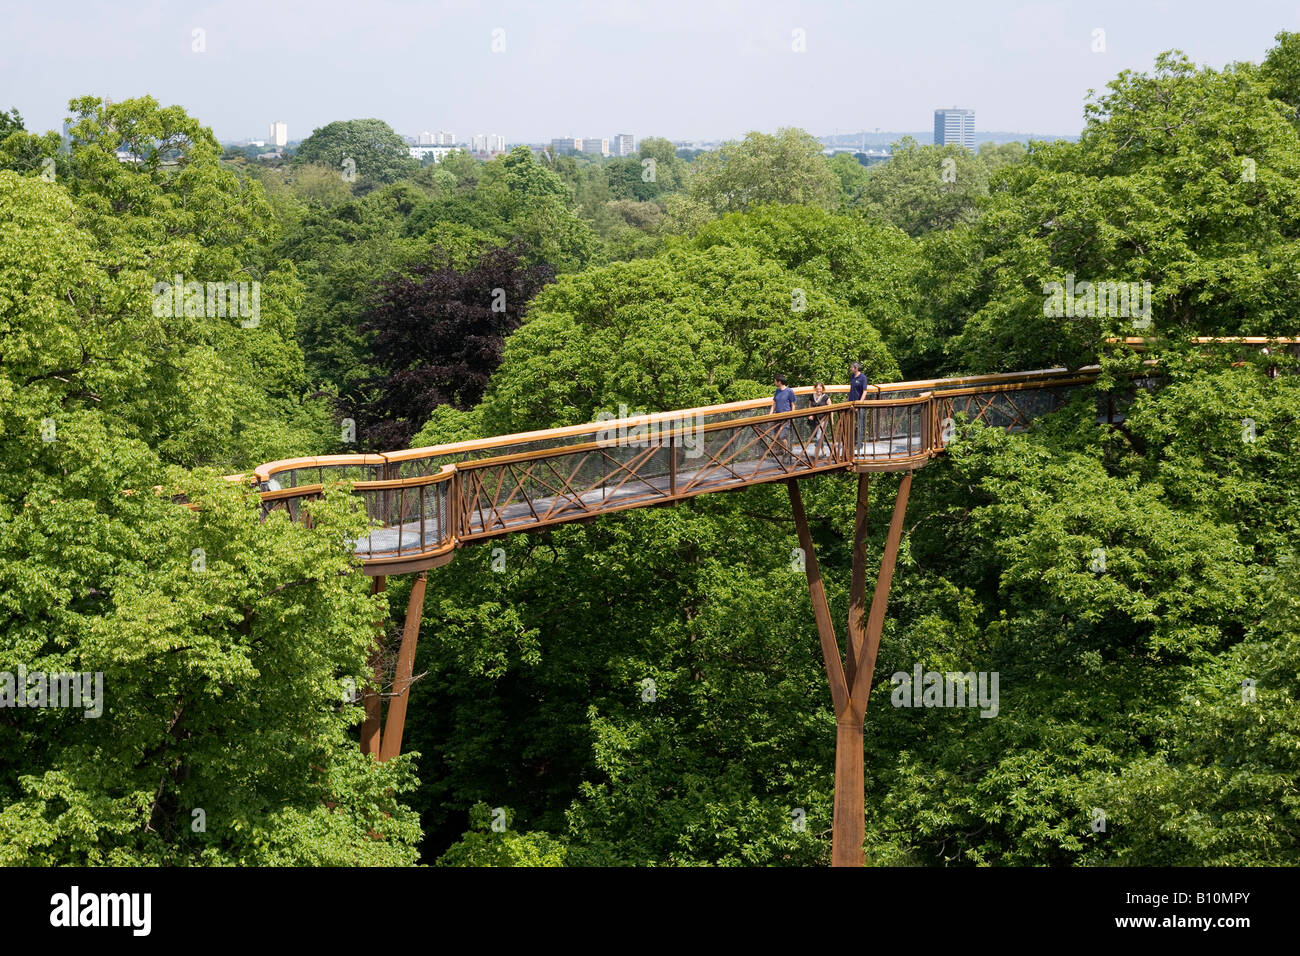 Xstrata Treetop Walkway, Royal Botanic Gardens, Kew. Architect: Marks Barfield Architects Stock Photo